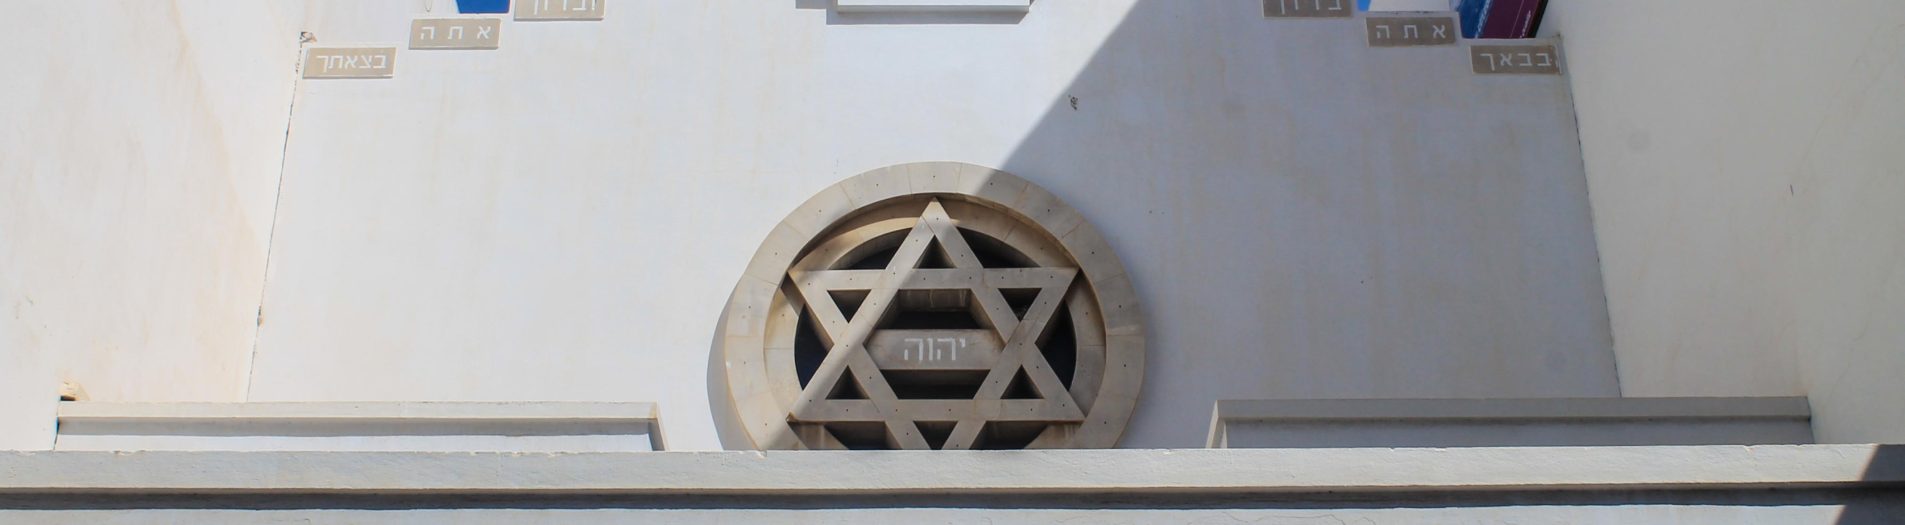 La synagogue Edmond Azria à Sfax, une copie de la grande synagogue de Tunis mais… en miniature